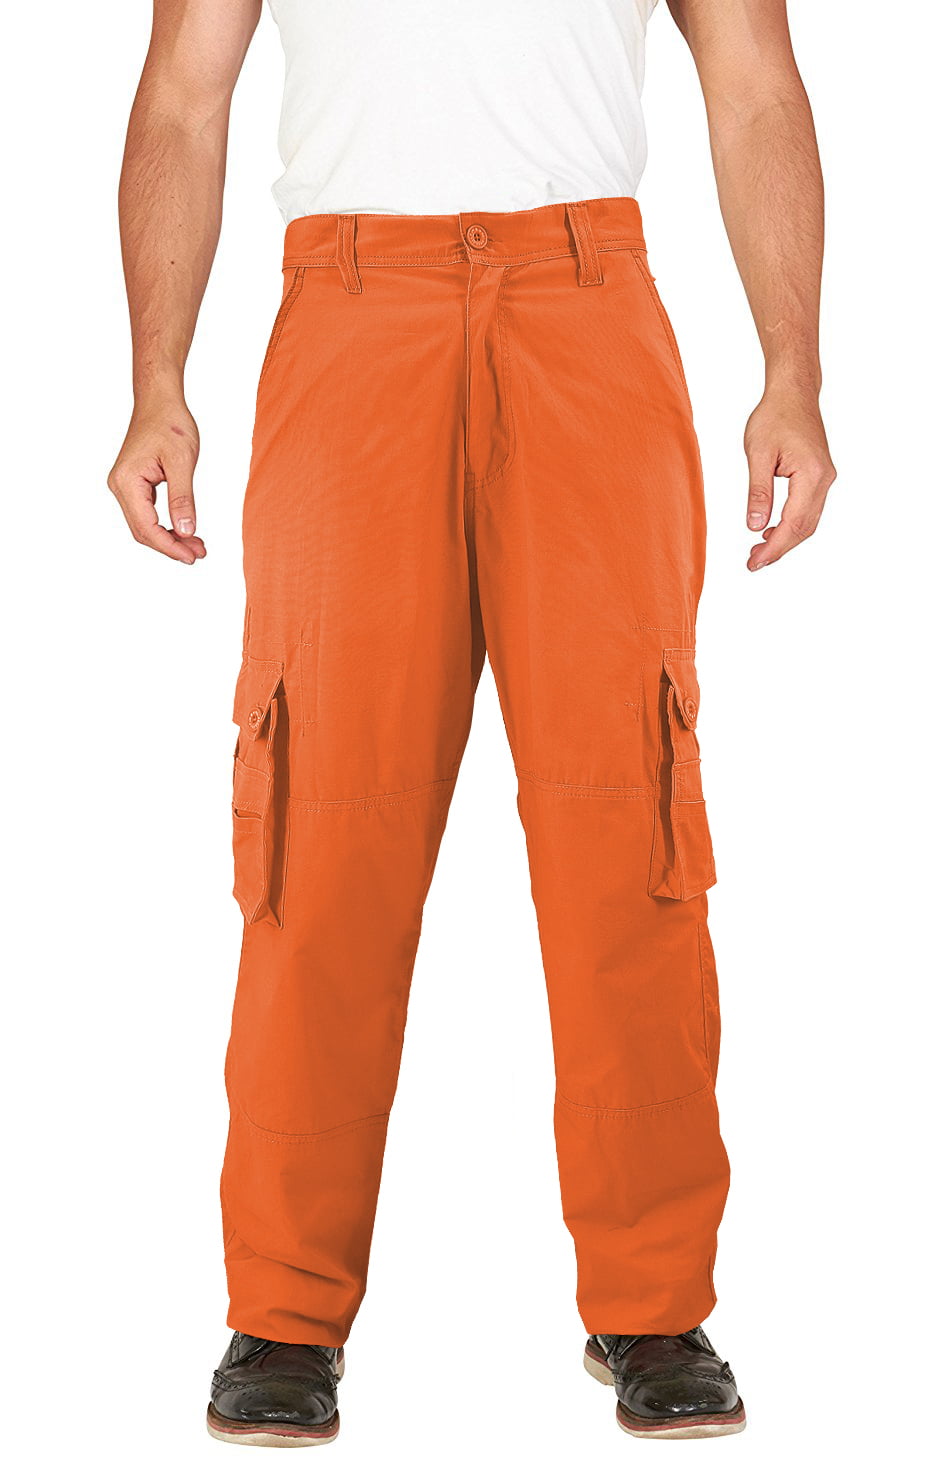 orange camo cargo pants mens